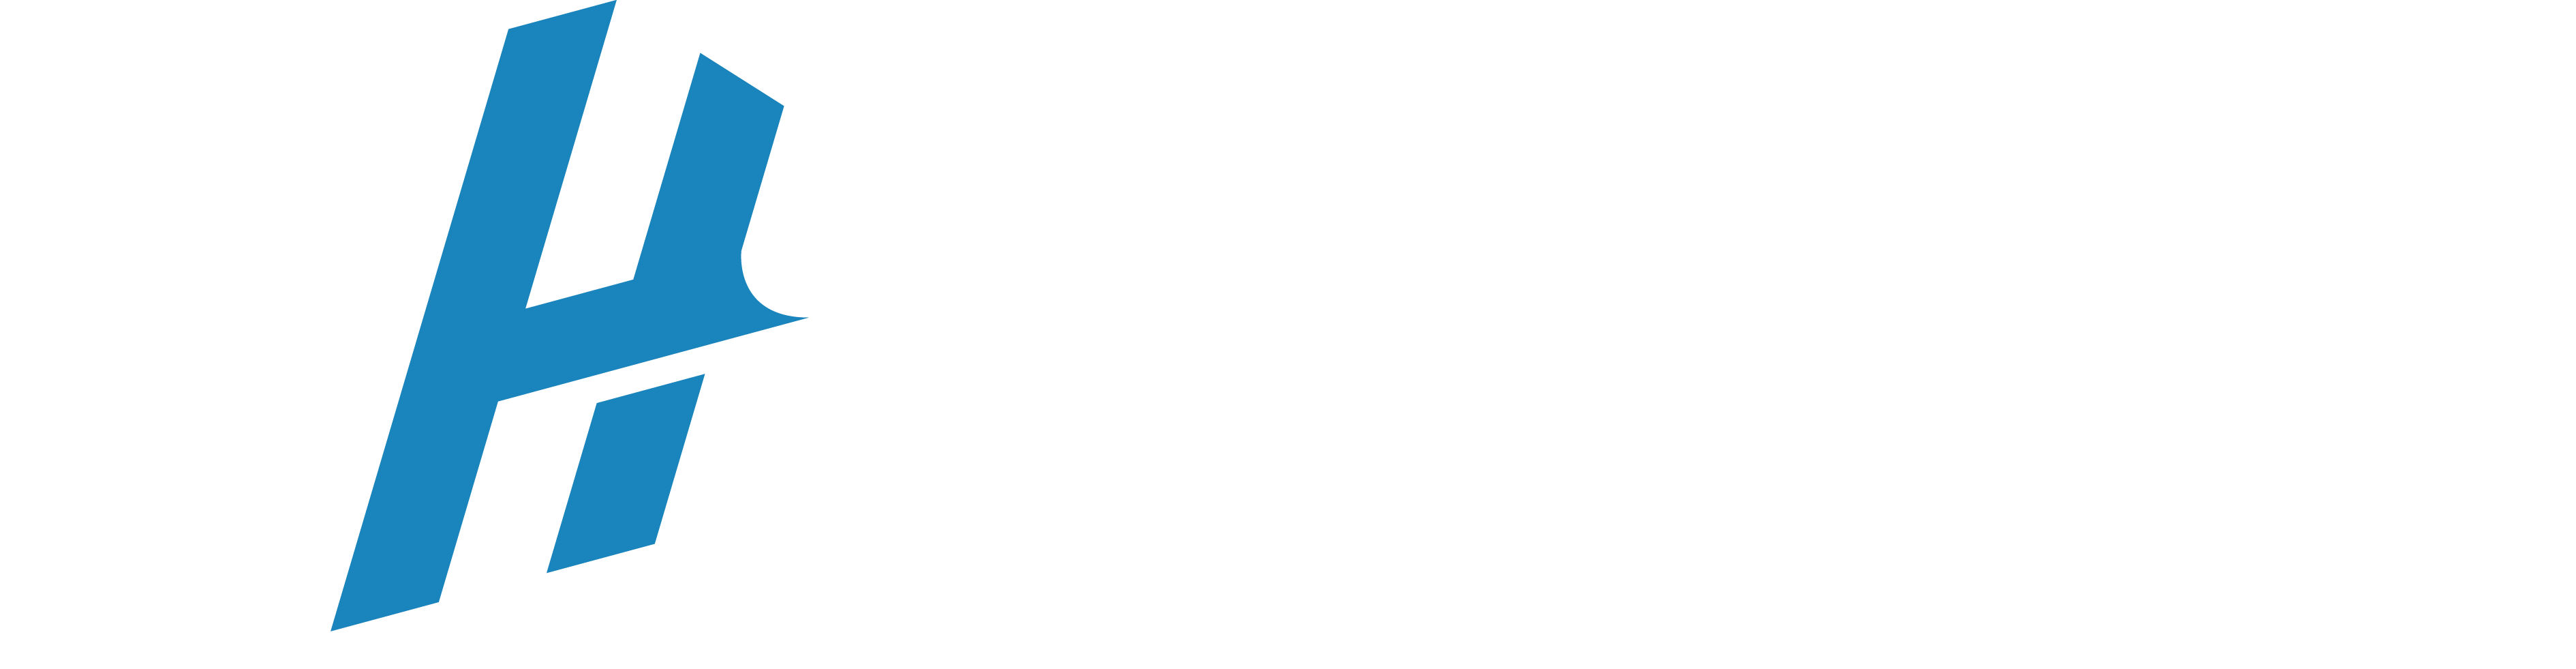 Hammerhead Logo - Hammerhead